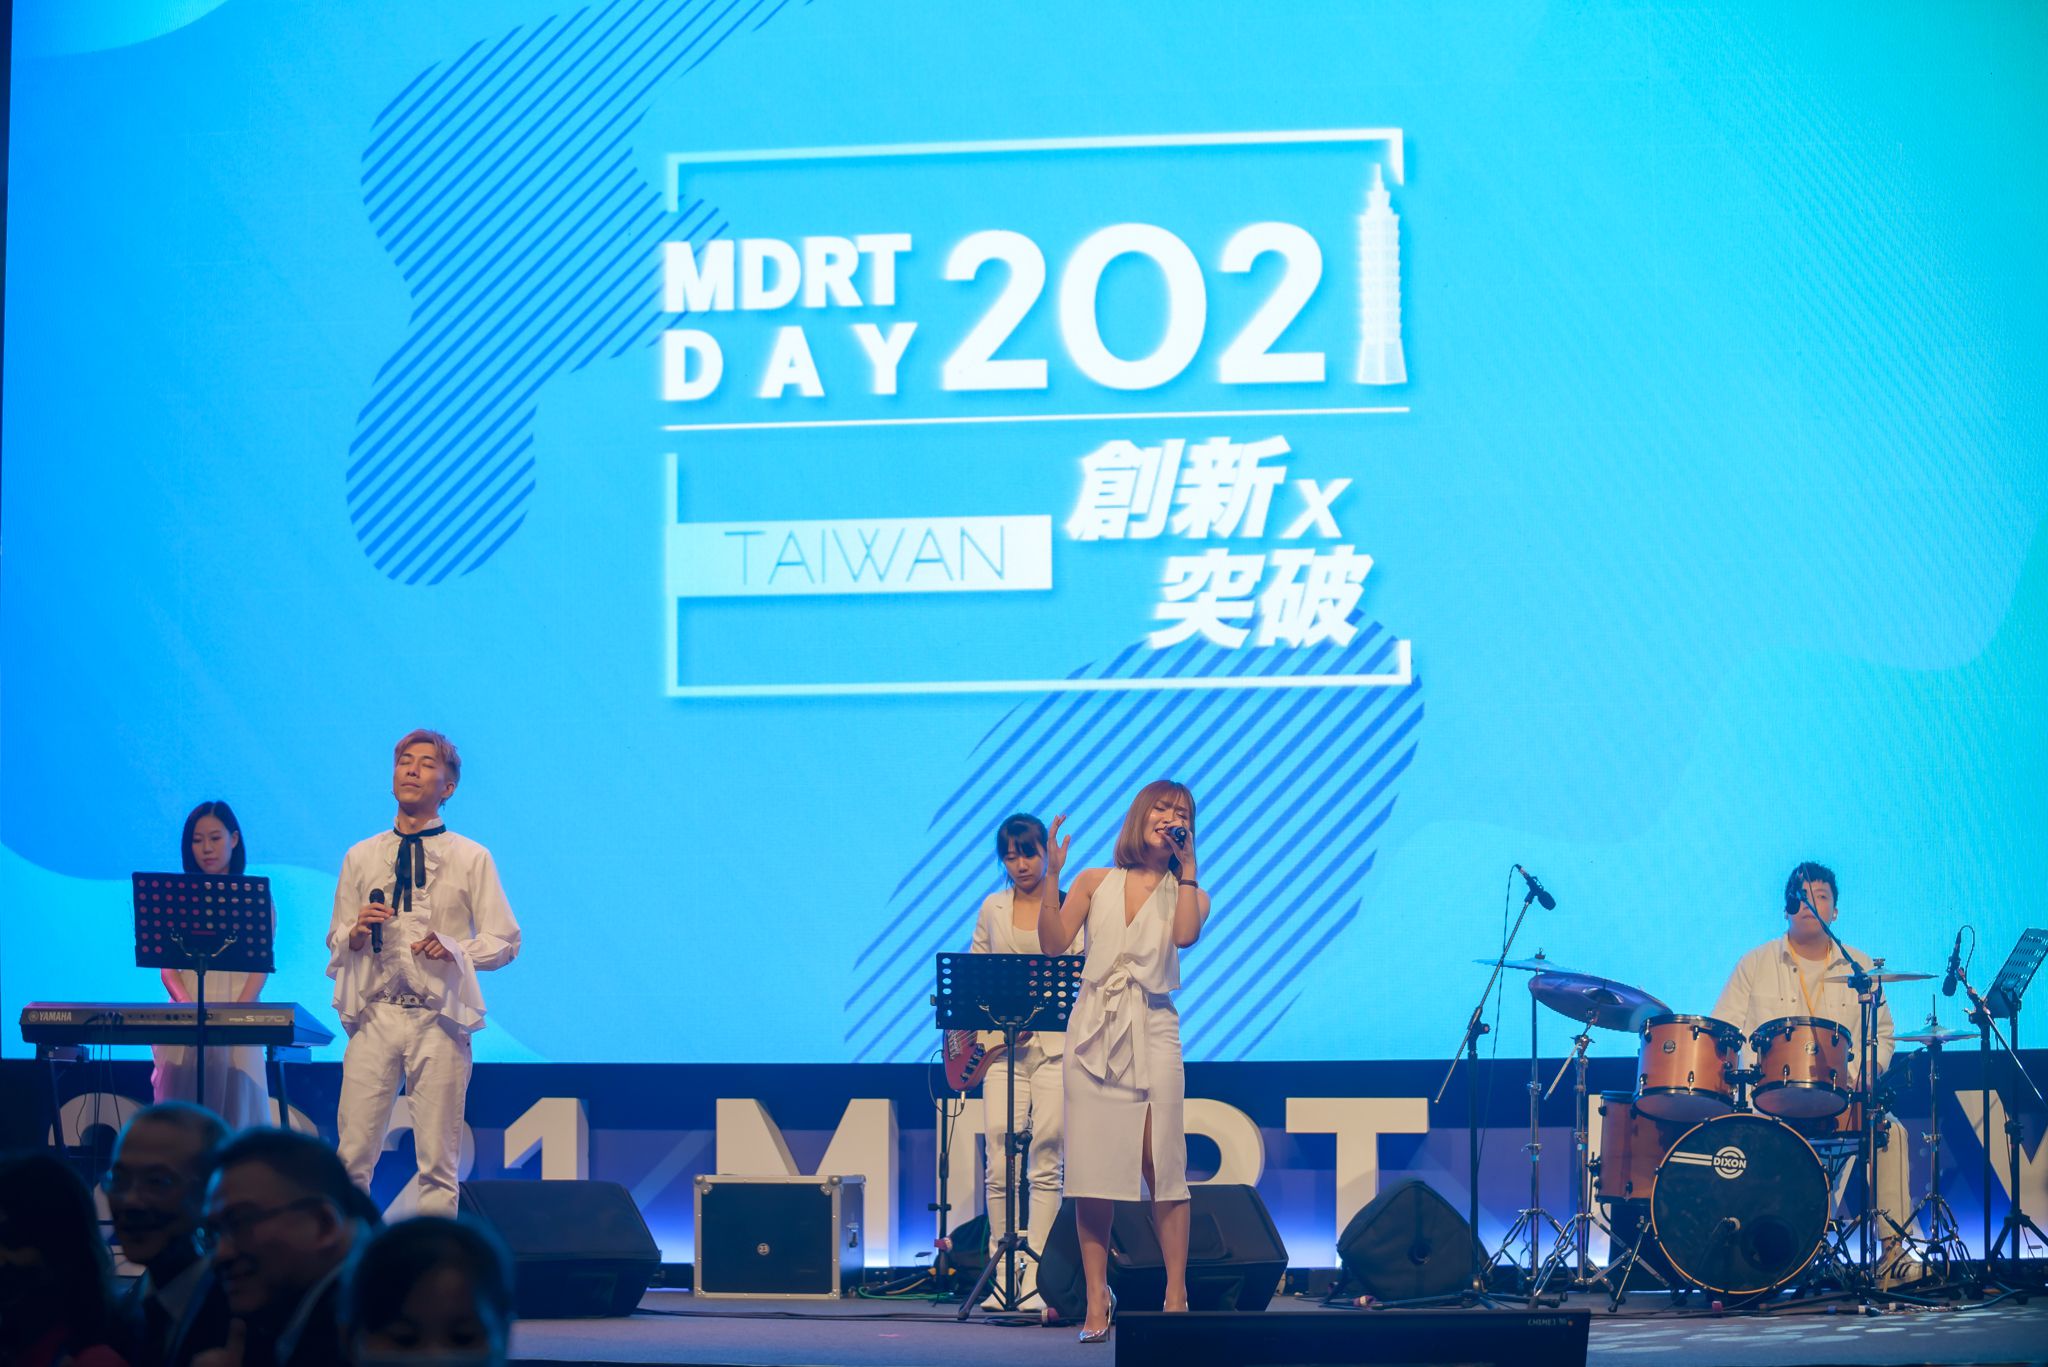 2021 MDRT DAY TAIWAN